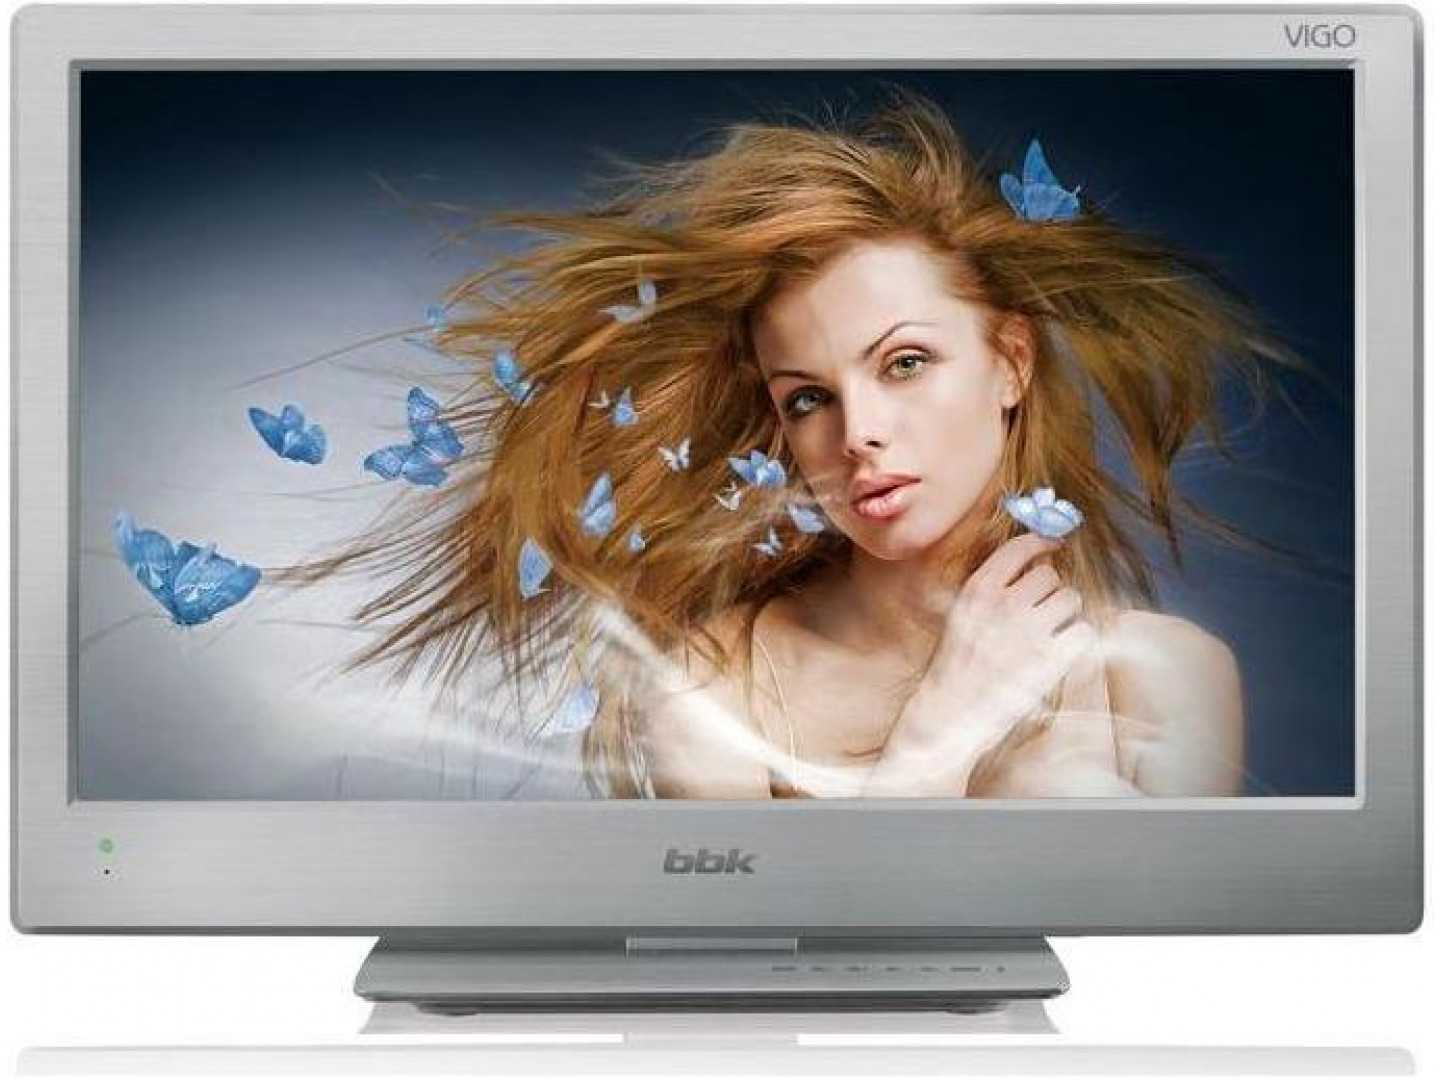 Телевизоры bbk — зимняя распродажа 2021, г. москва